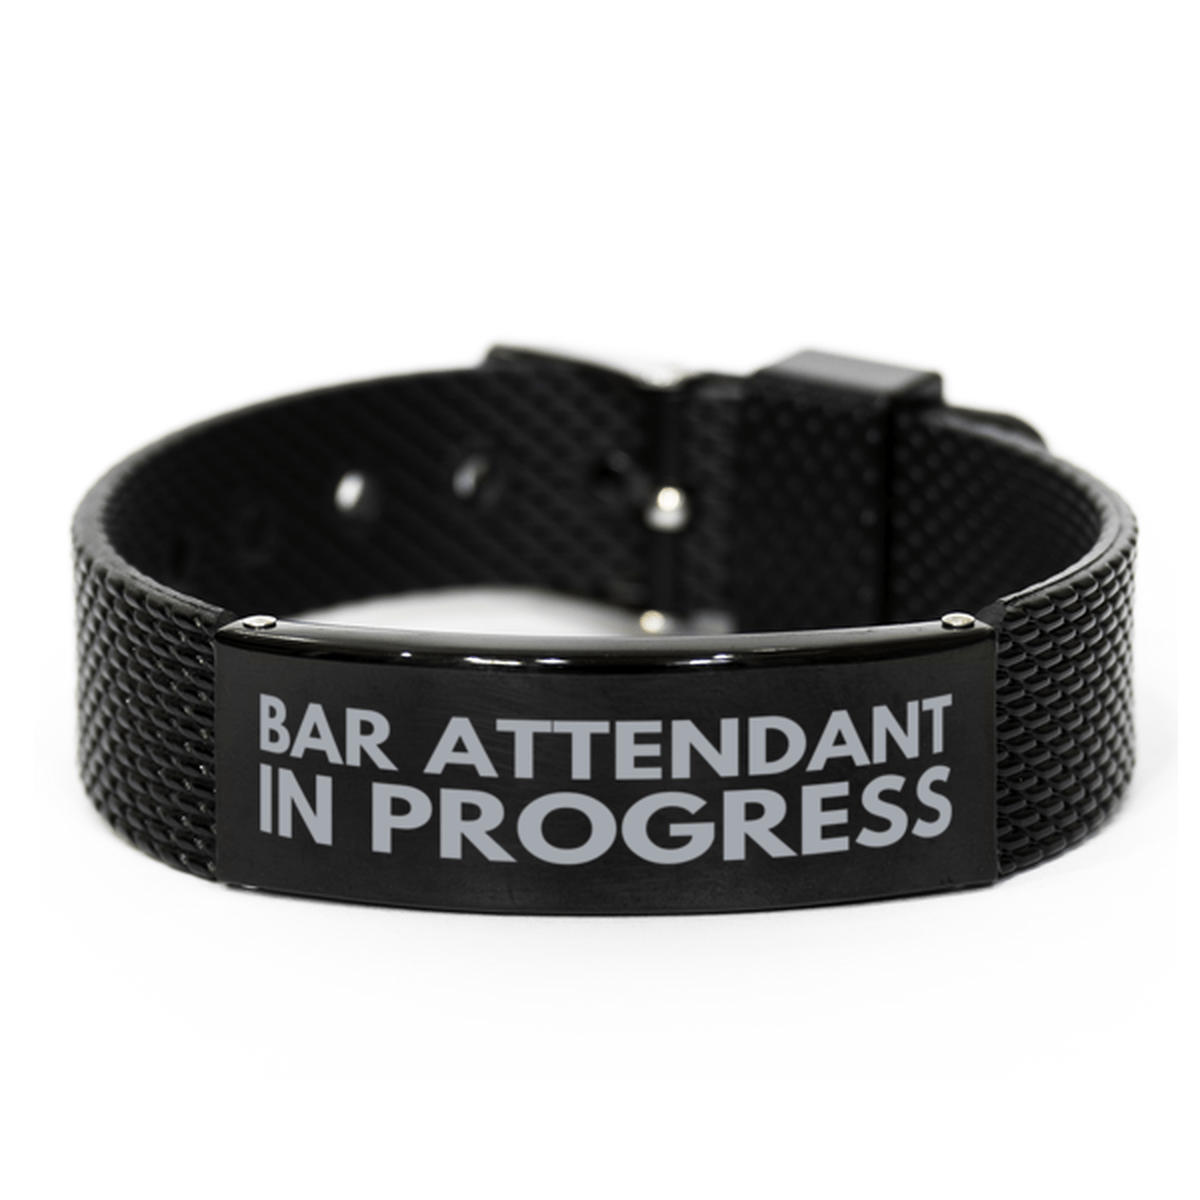 Inspirational Bar Attendant Black Shark Mesh Bracelet, Bar Attendant In Progress, Best Graduation Gifts for Students